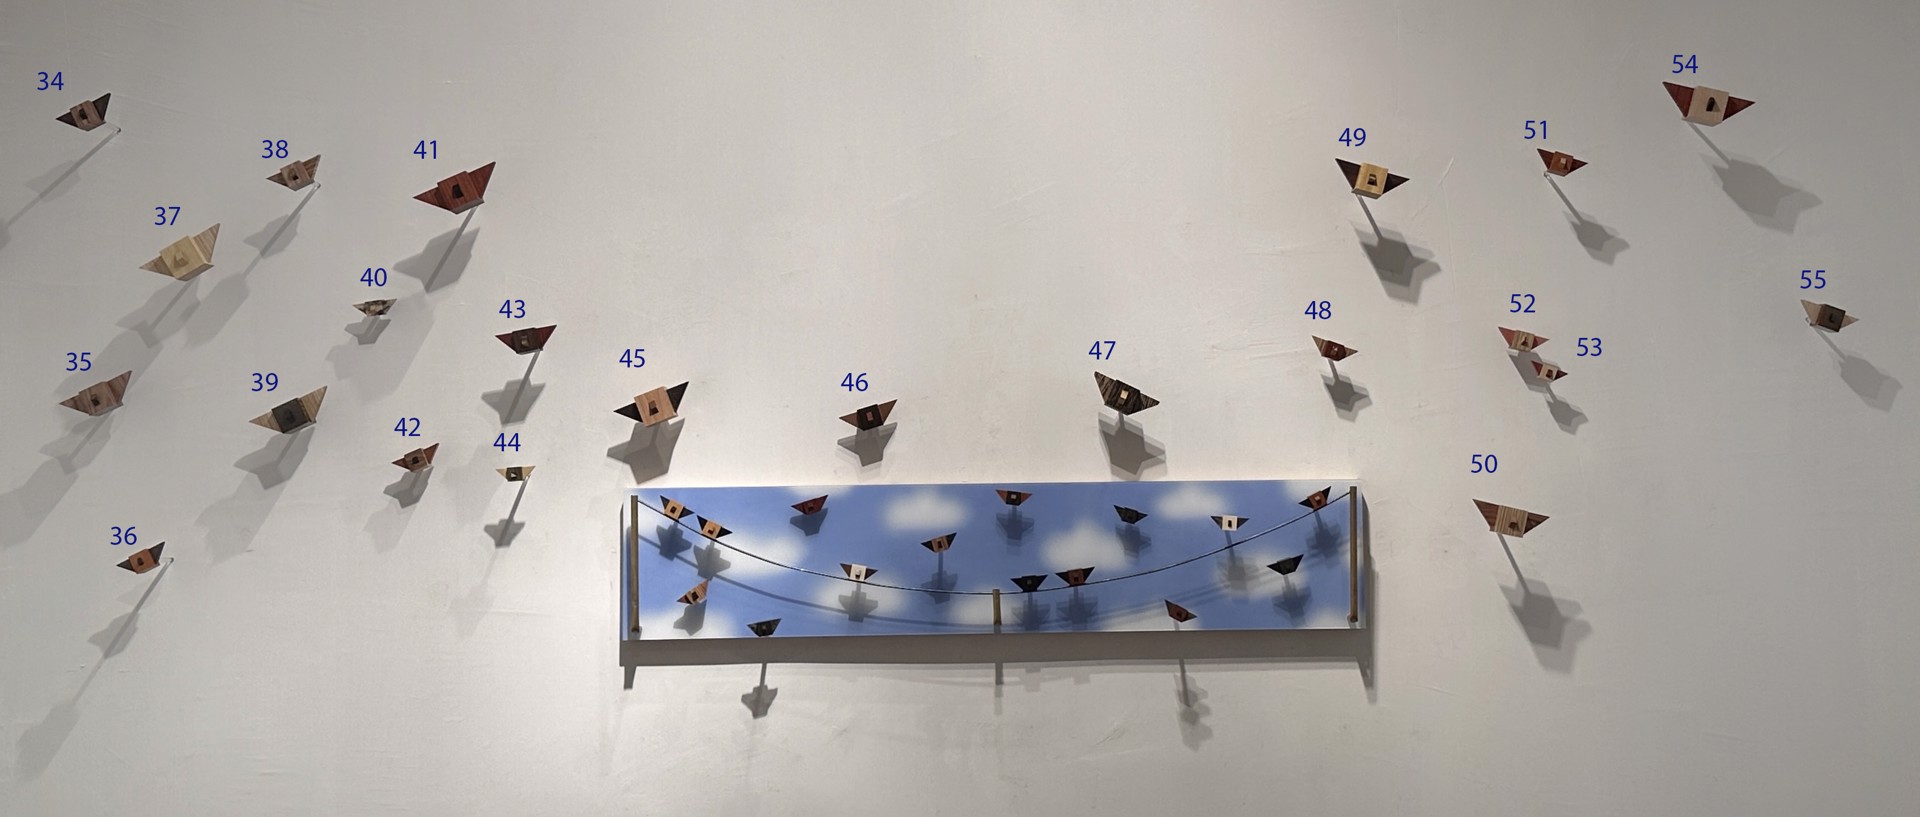 The Flock (Master bedroom installation of 40 birds) by Brendan Flores